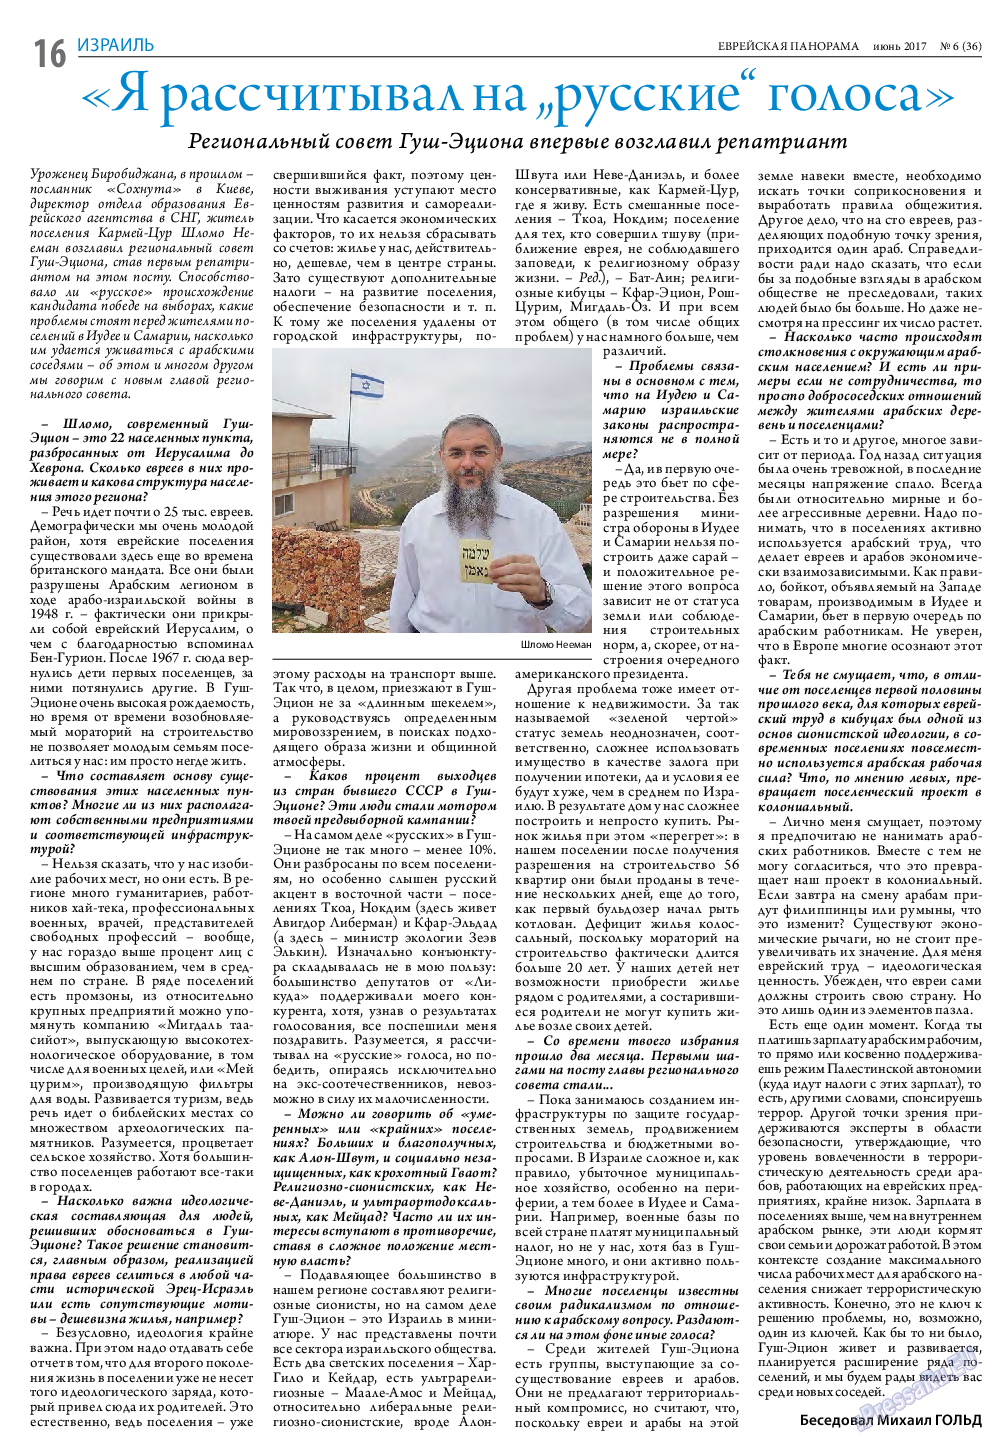 Еврейская панорама, газета. 2017 №6 стр.16